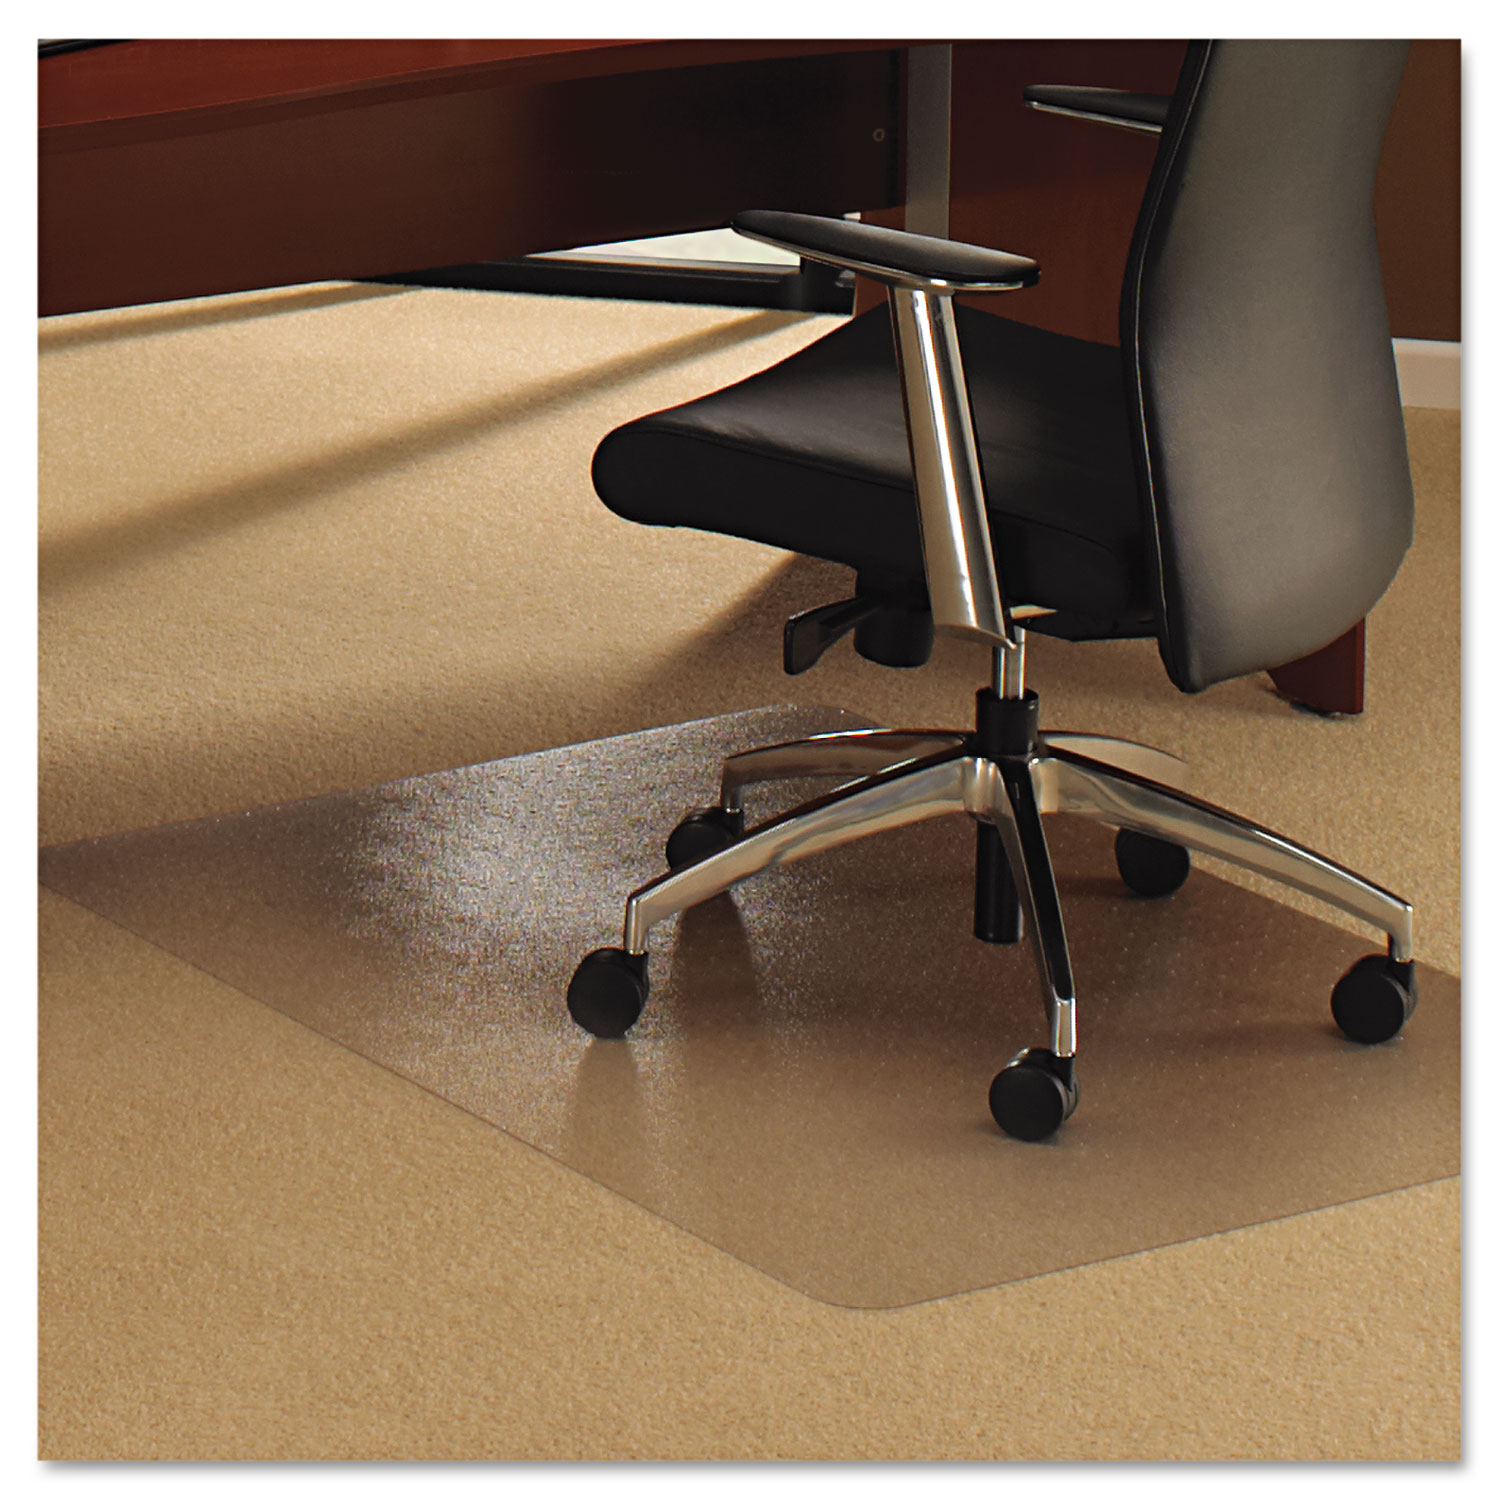  Floortex 1115227ER Cleartex Ultimat Chair Mat for High Pile Carpets, 60 x 48, Clear (FLR1115227ER) 